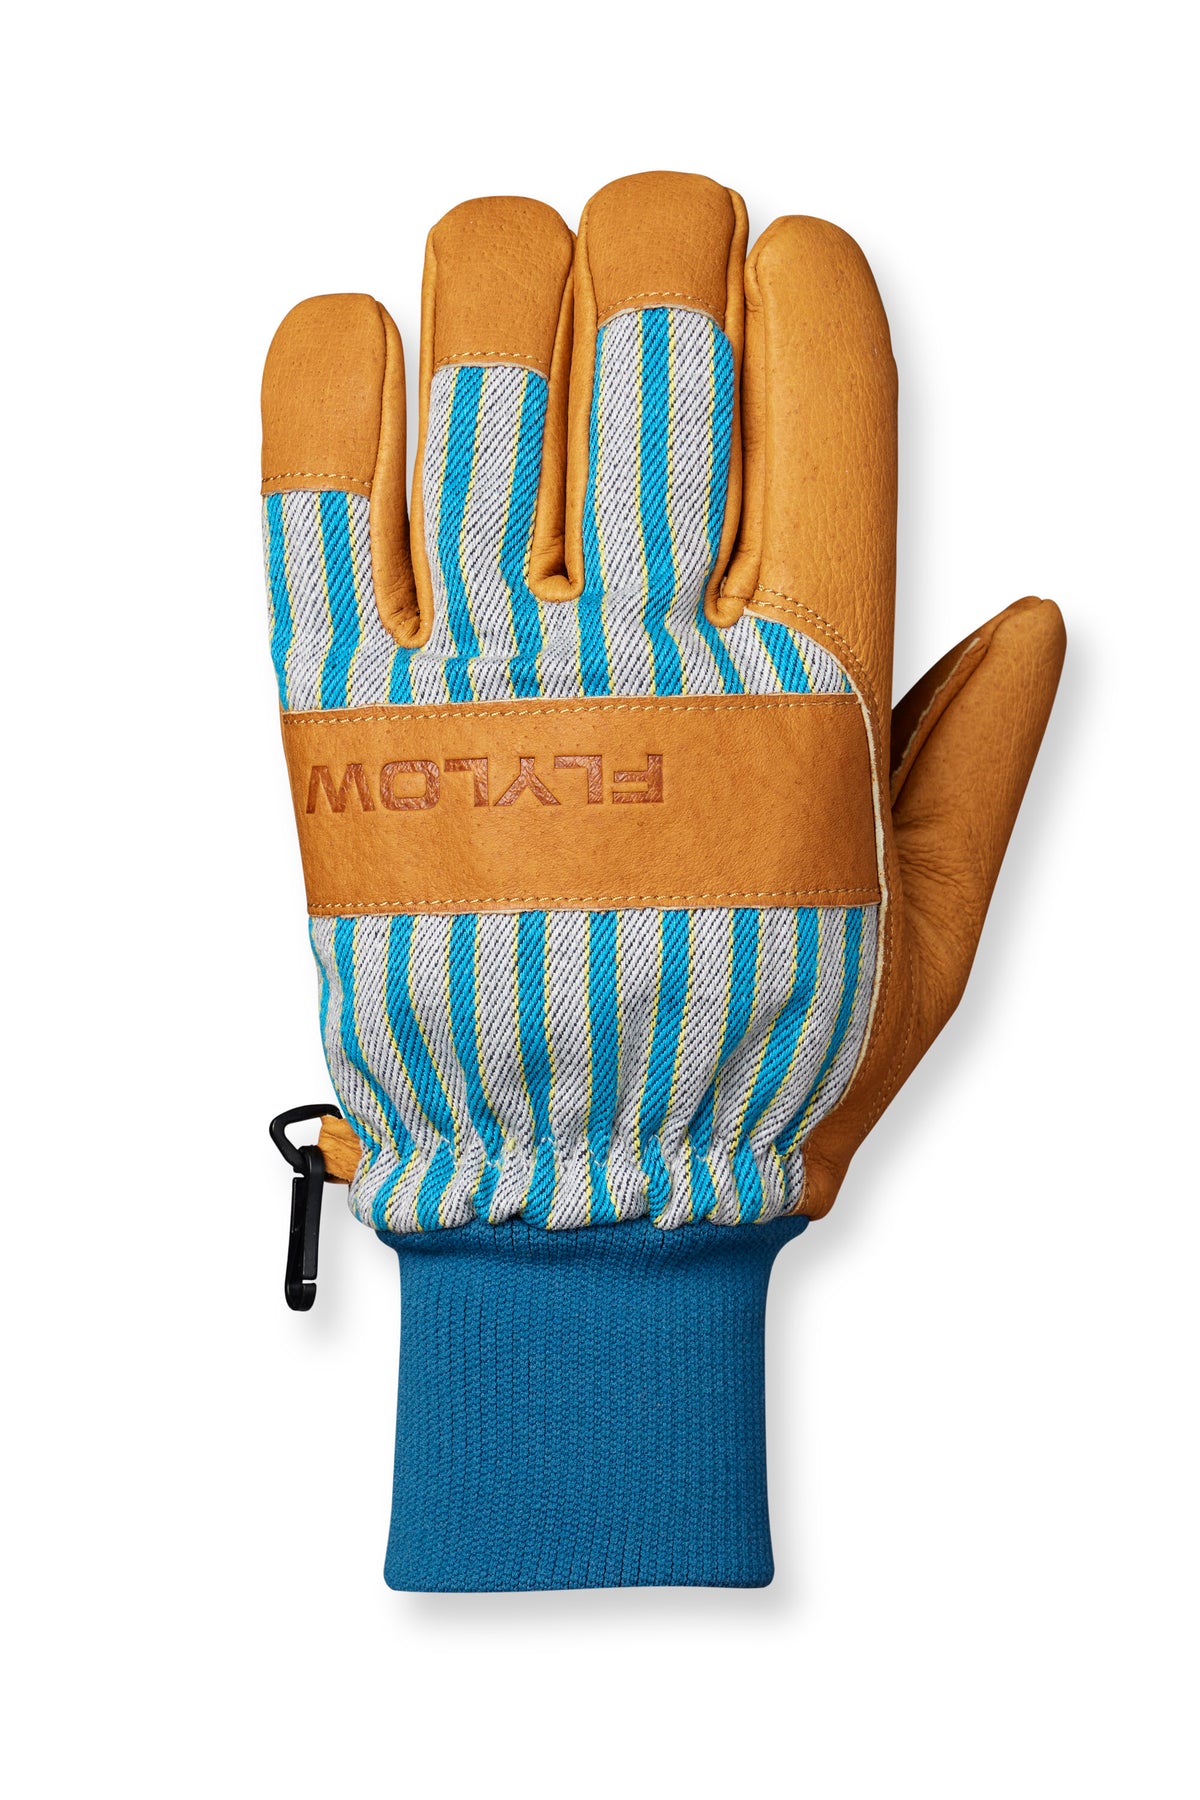 Tough Guy Glove - Leather Ski Gloves | Flylow – Flylow Gear